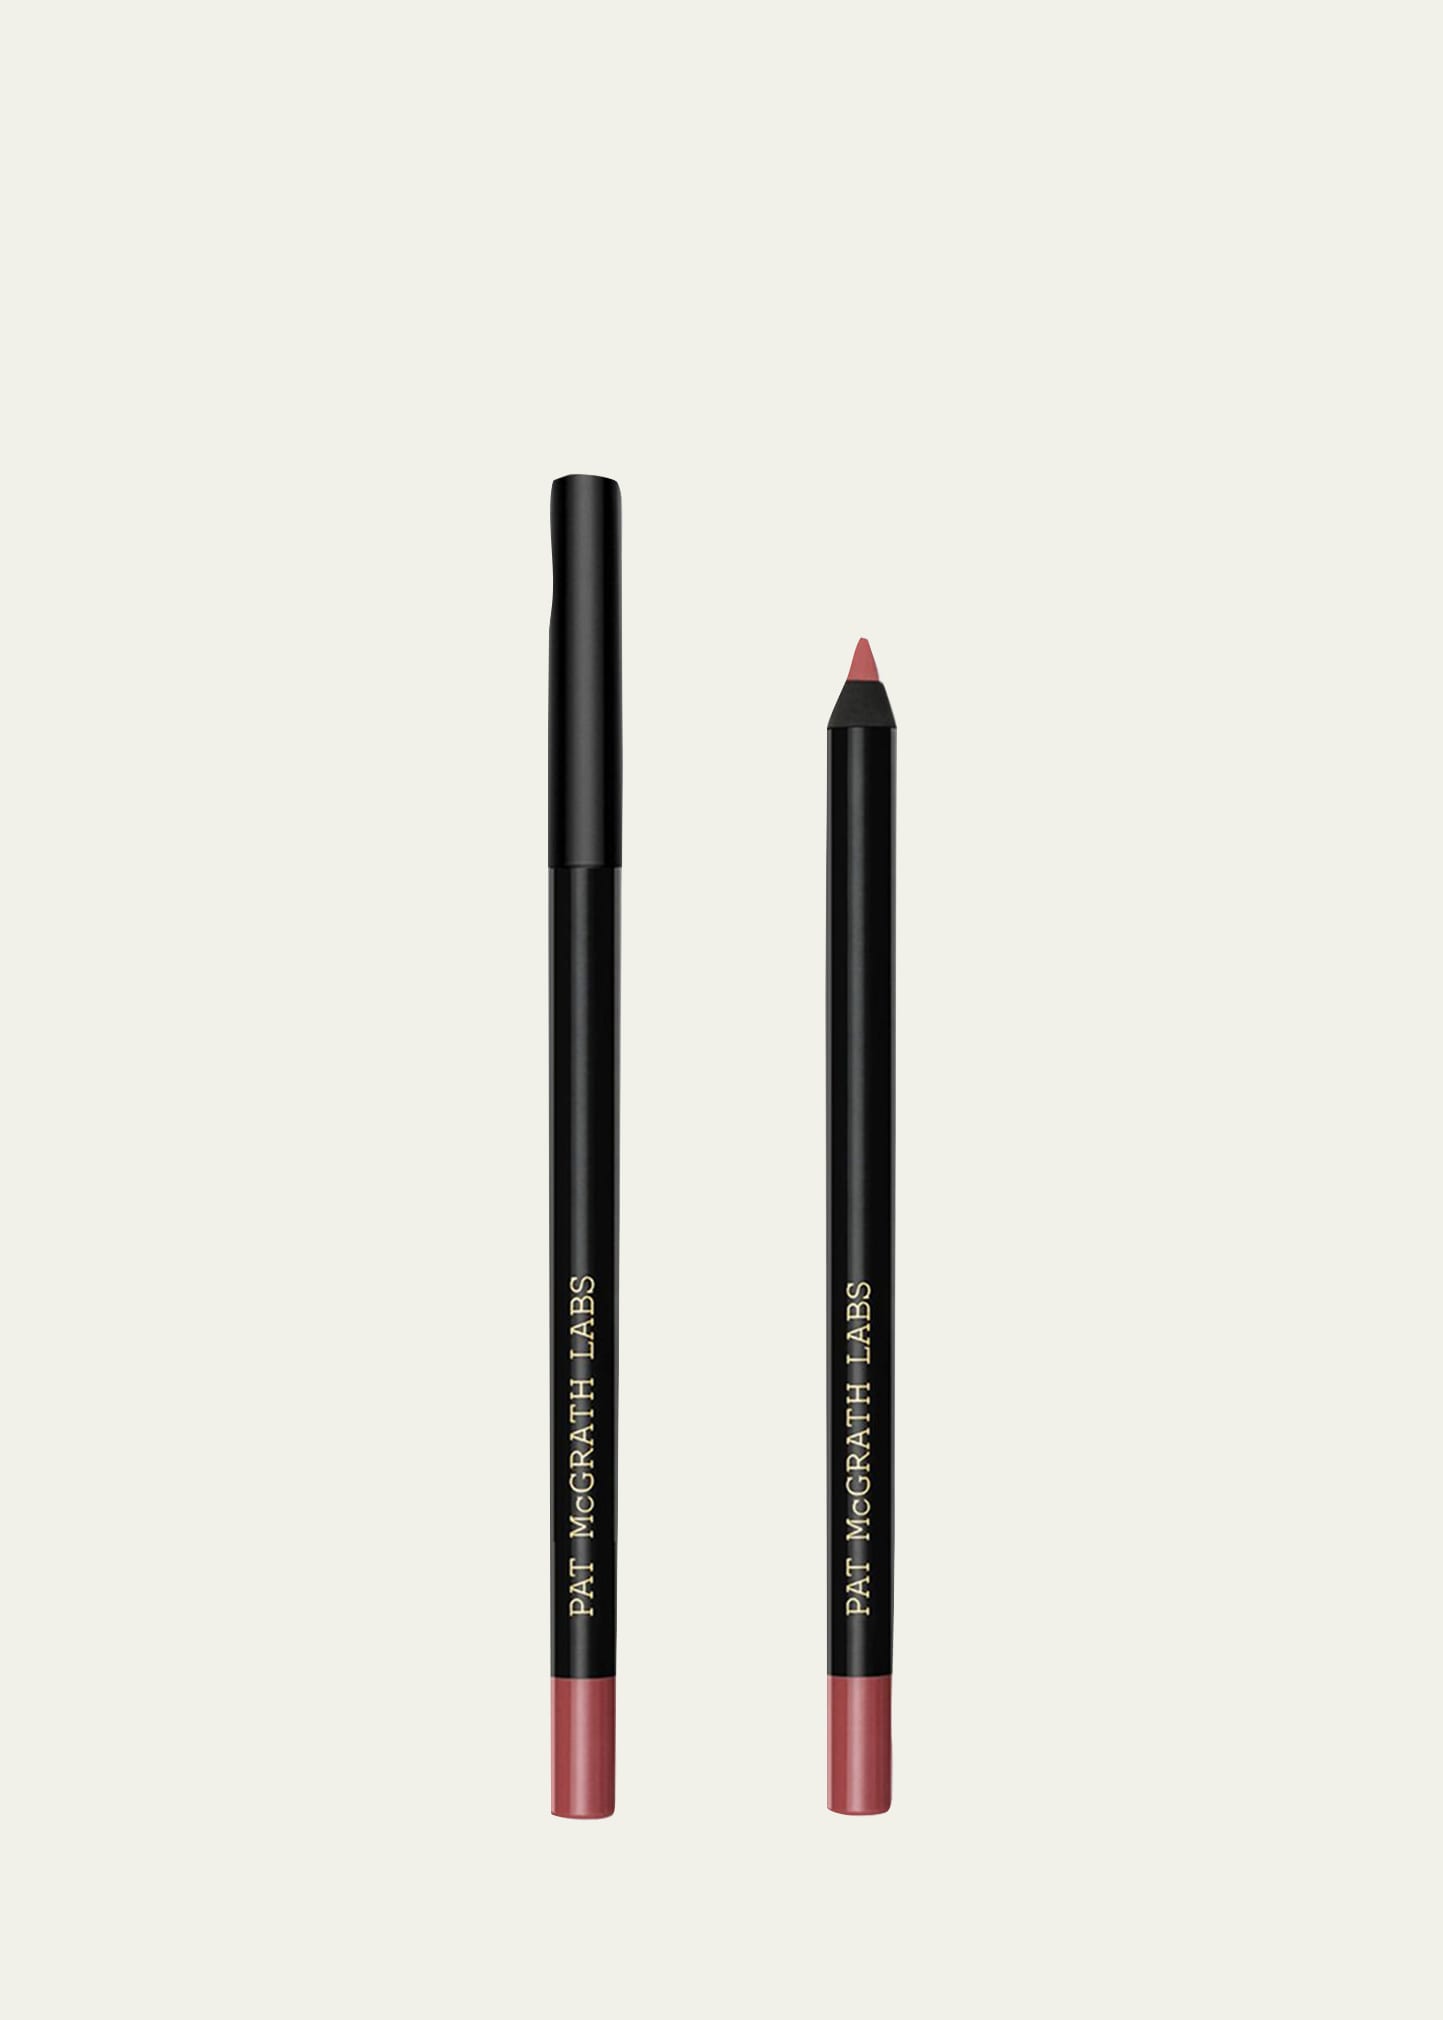 Pat Mcgrath Labs Permagel Ultra Lip Pencil In Star Struck